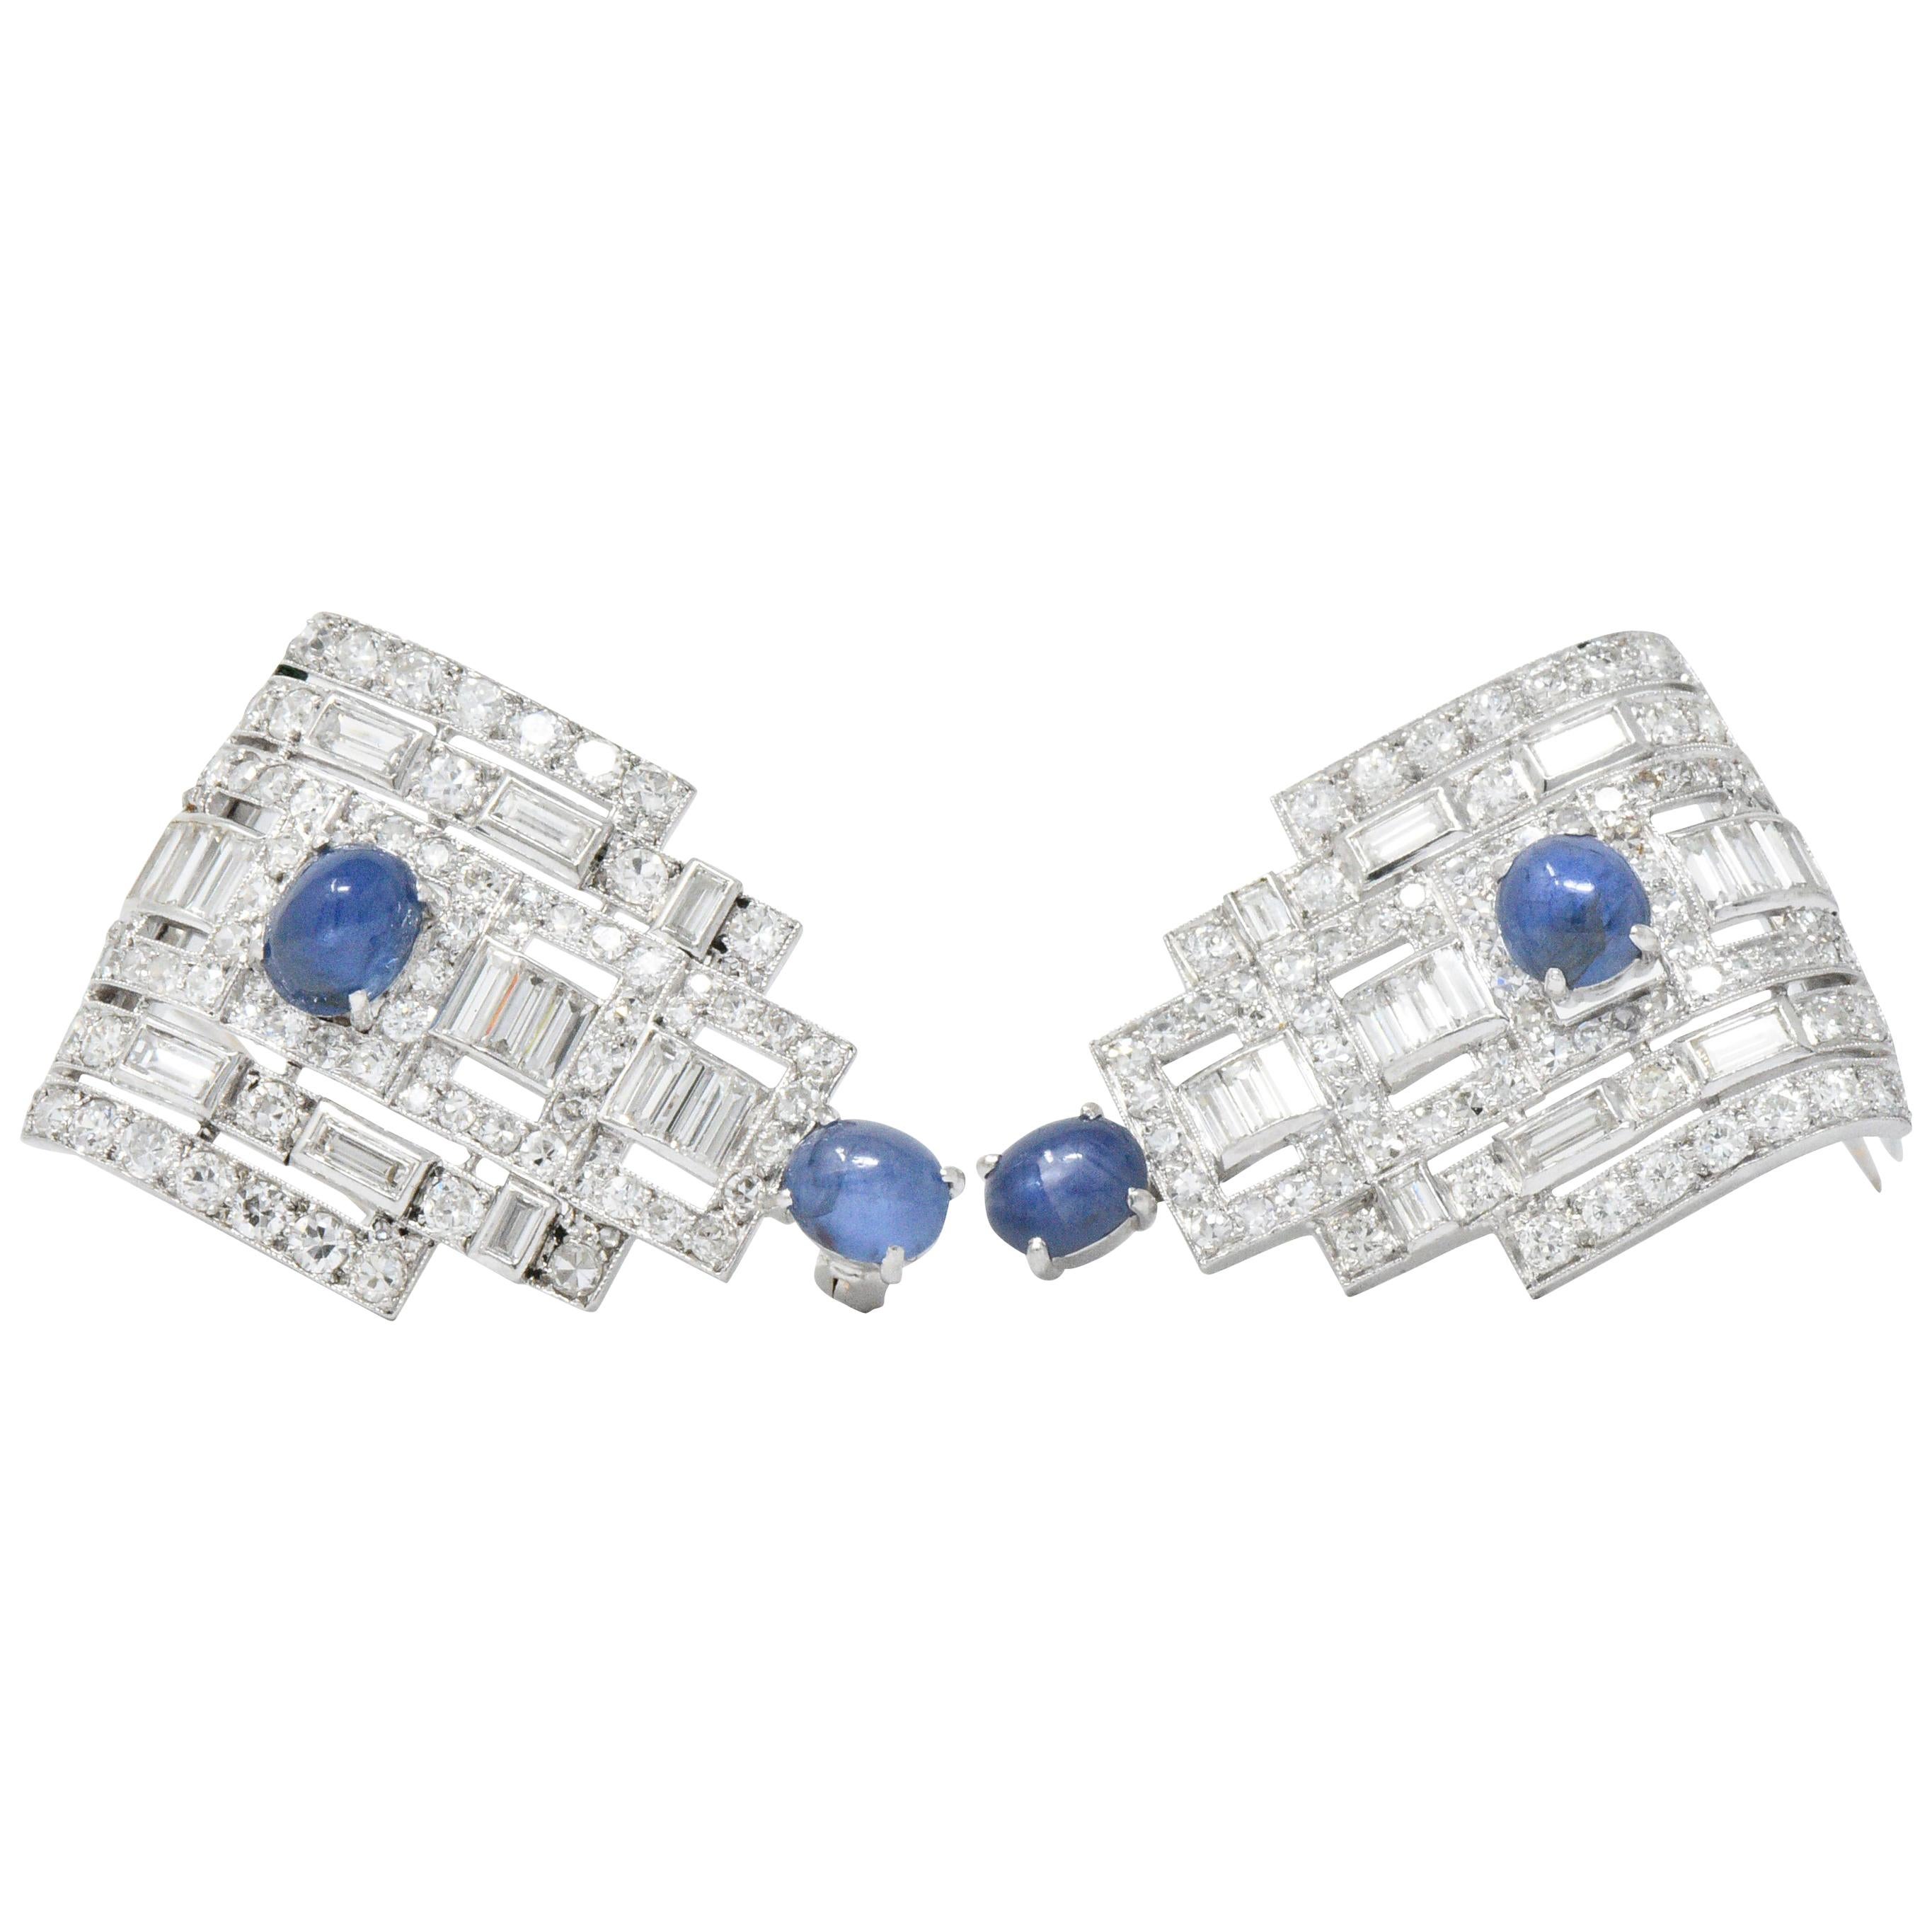 Stunning Art Deco 12.15 Carat Sapphire Diamond Platinum Clips